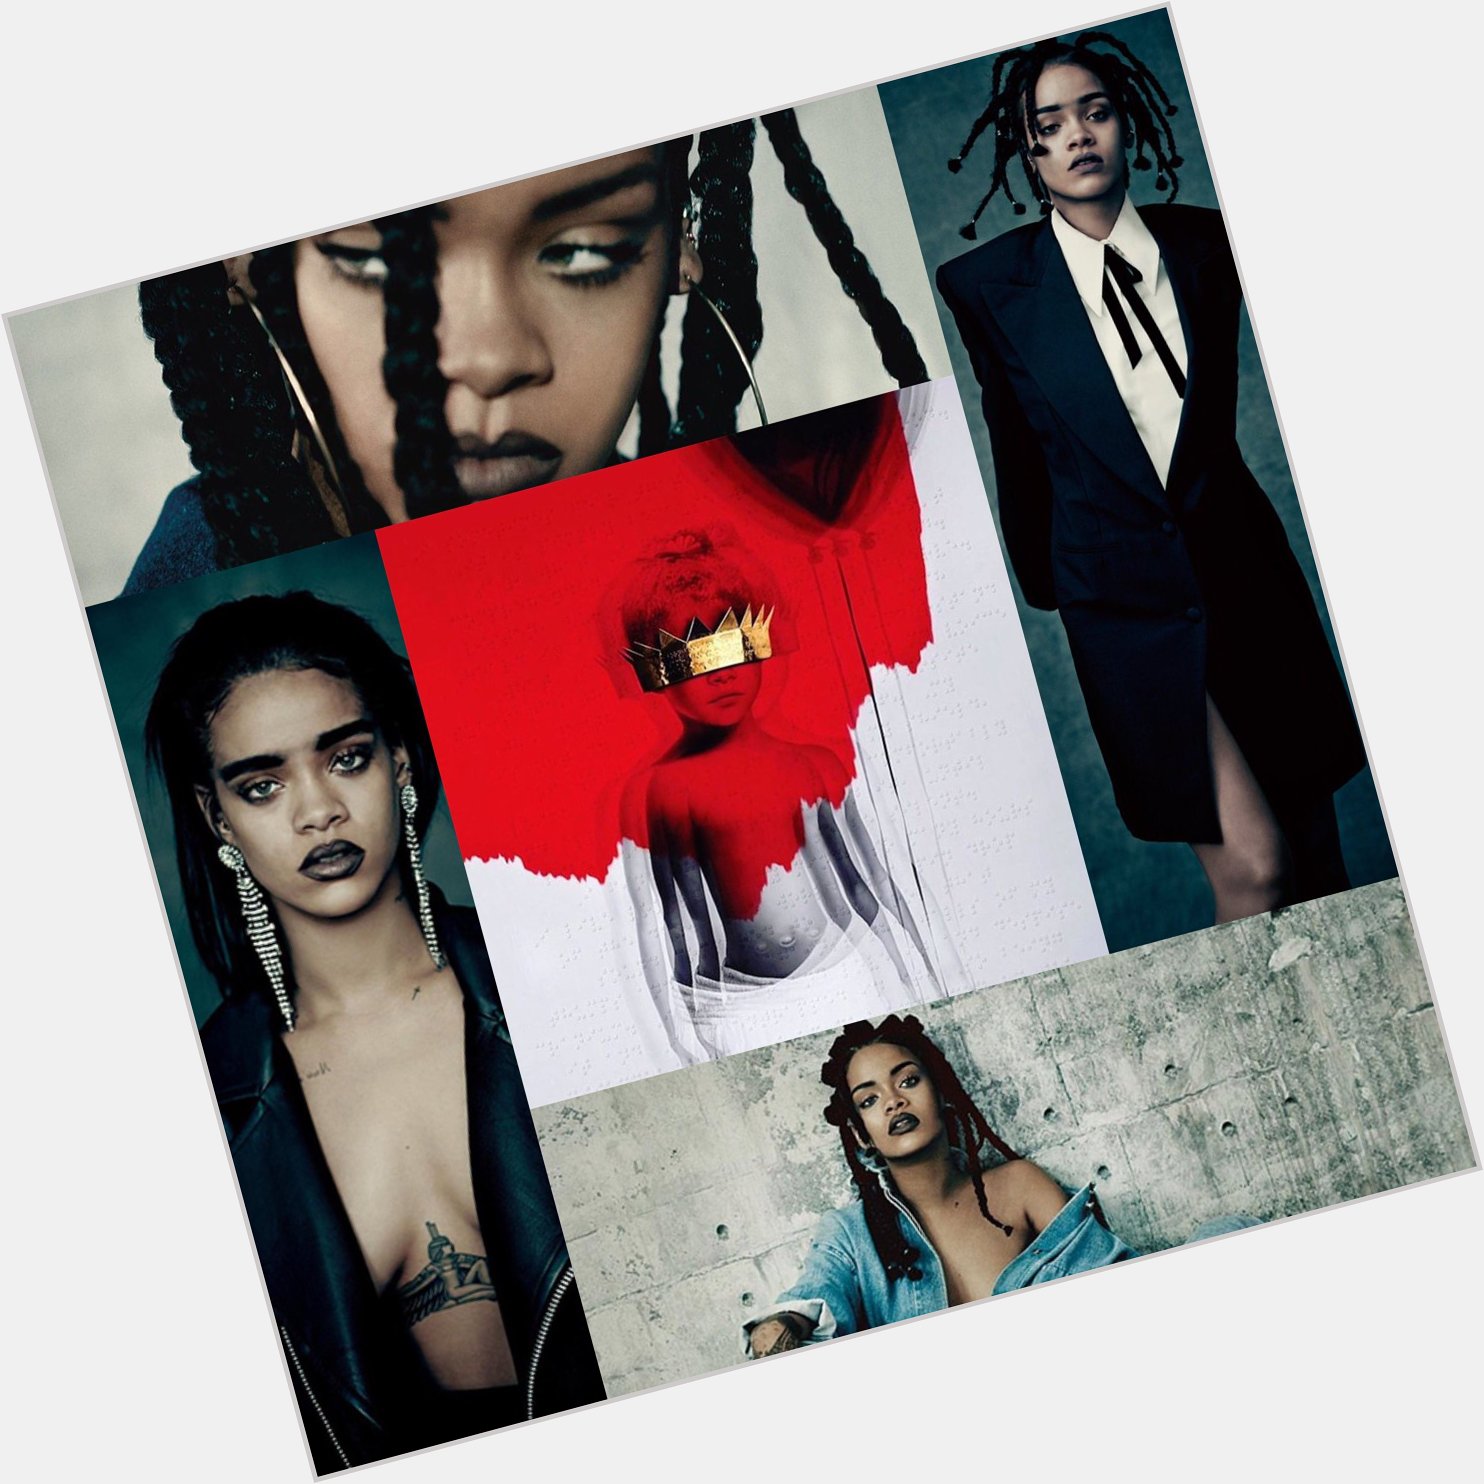 Happy second birthday to Rihanna s Album Anti    